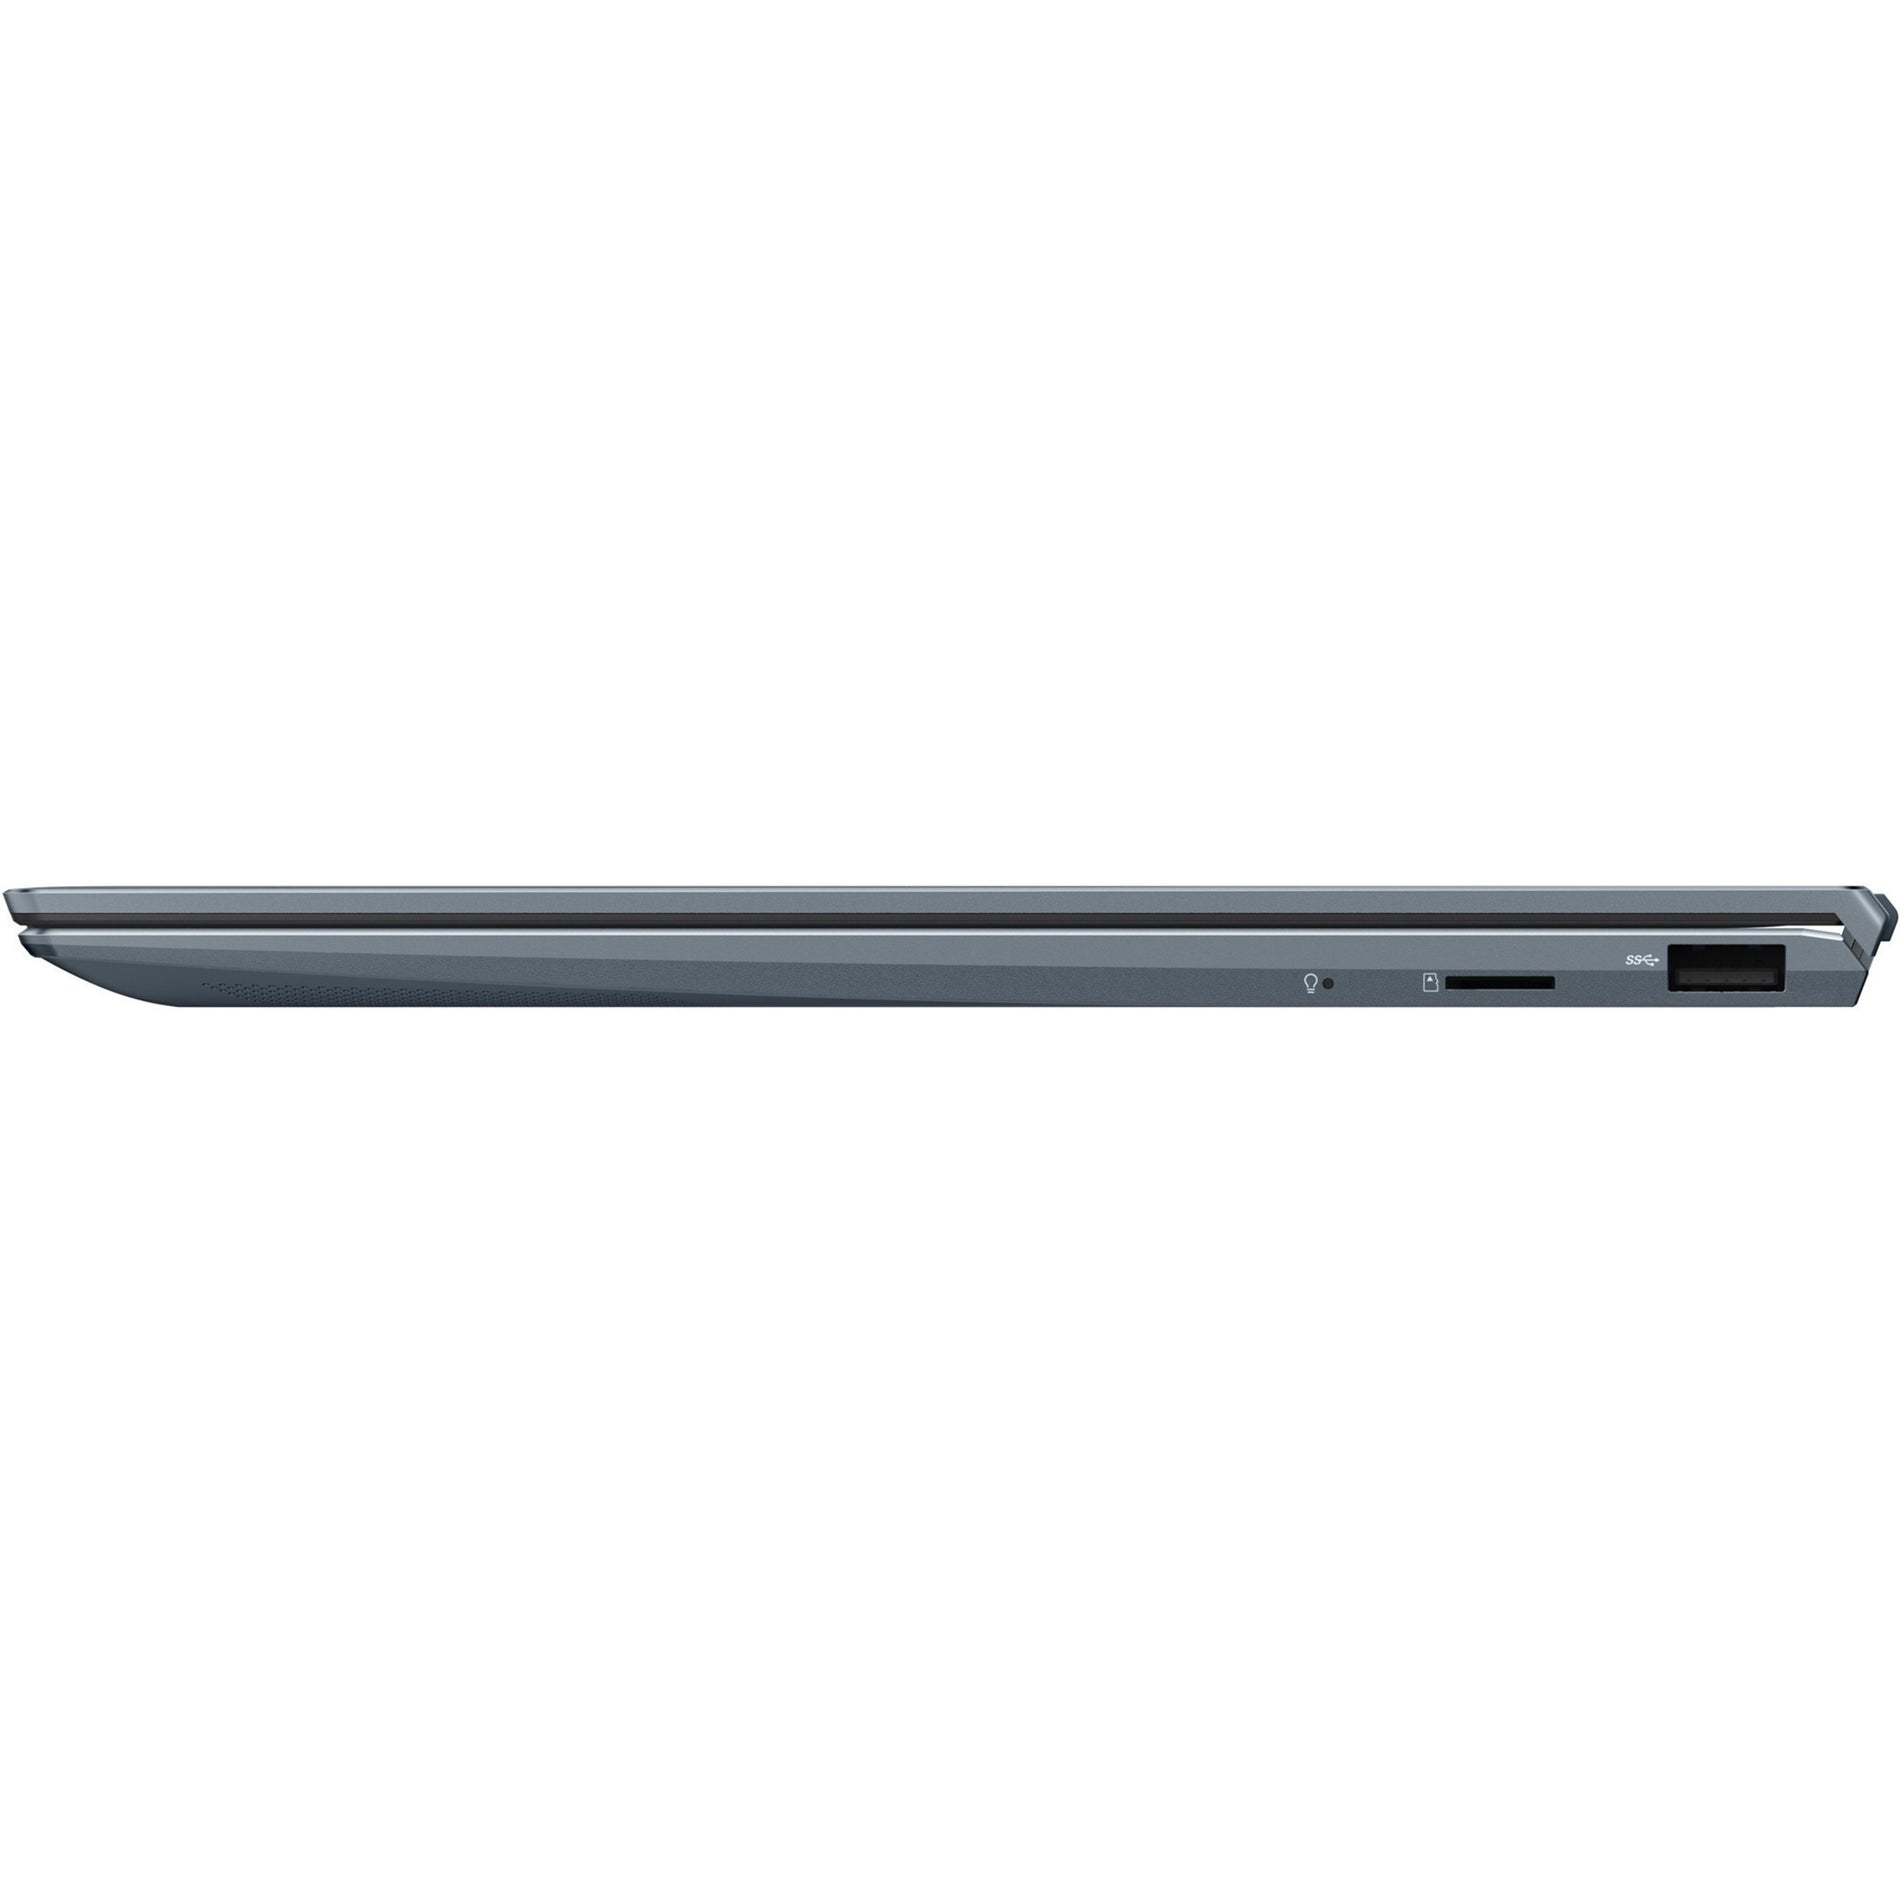 Asus UX325EA-DH51 ZenBook 13 Notebook, 13.3" Full HD, Intel Core i5, 8GB RAM, 256GB SSD, Pine Gray